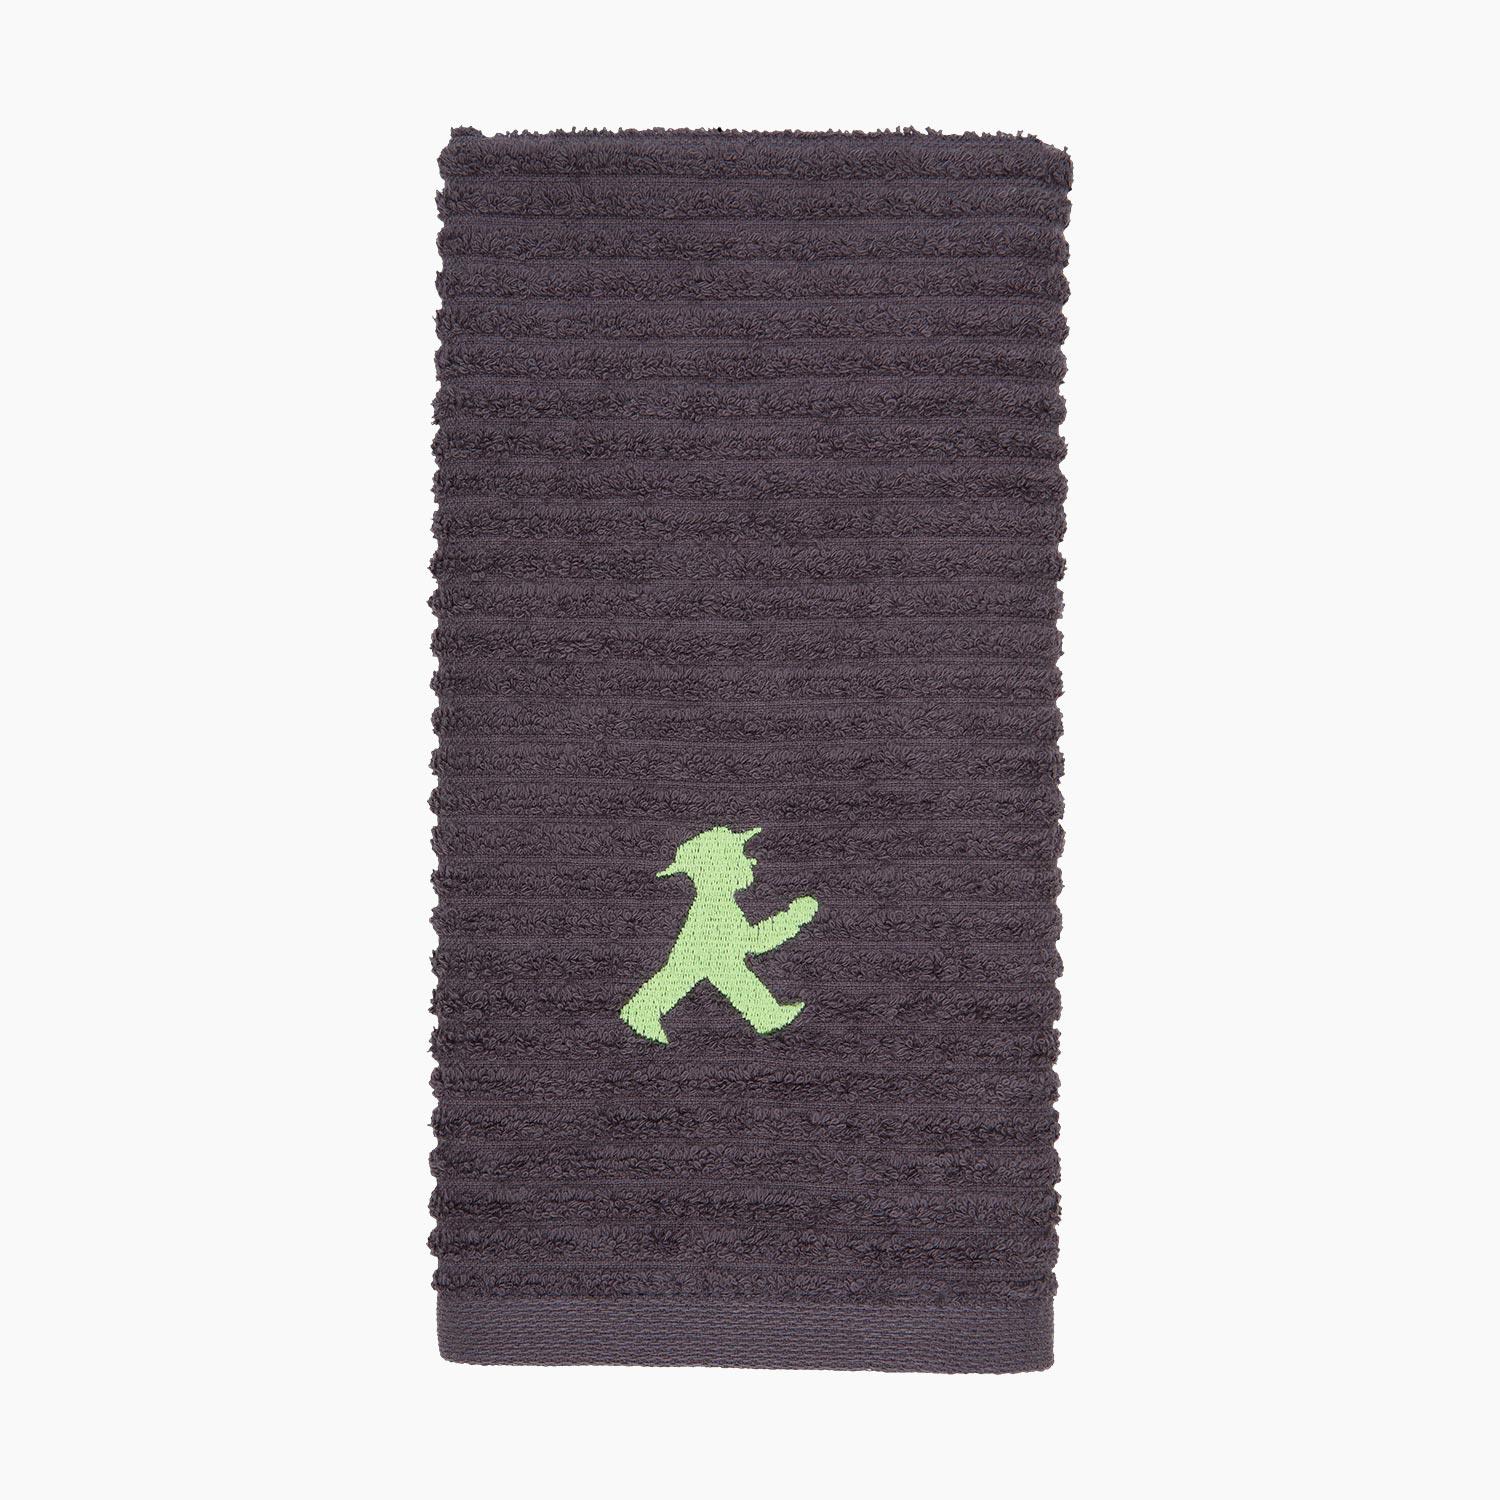 WASSERMÄNNCHEN grey/green/ Towel Small